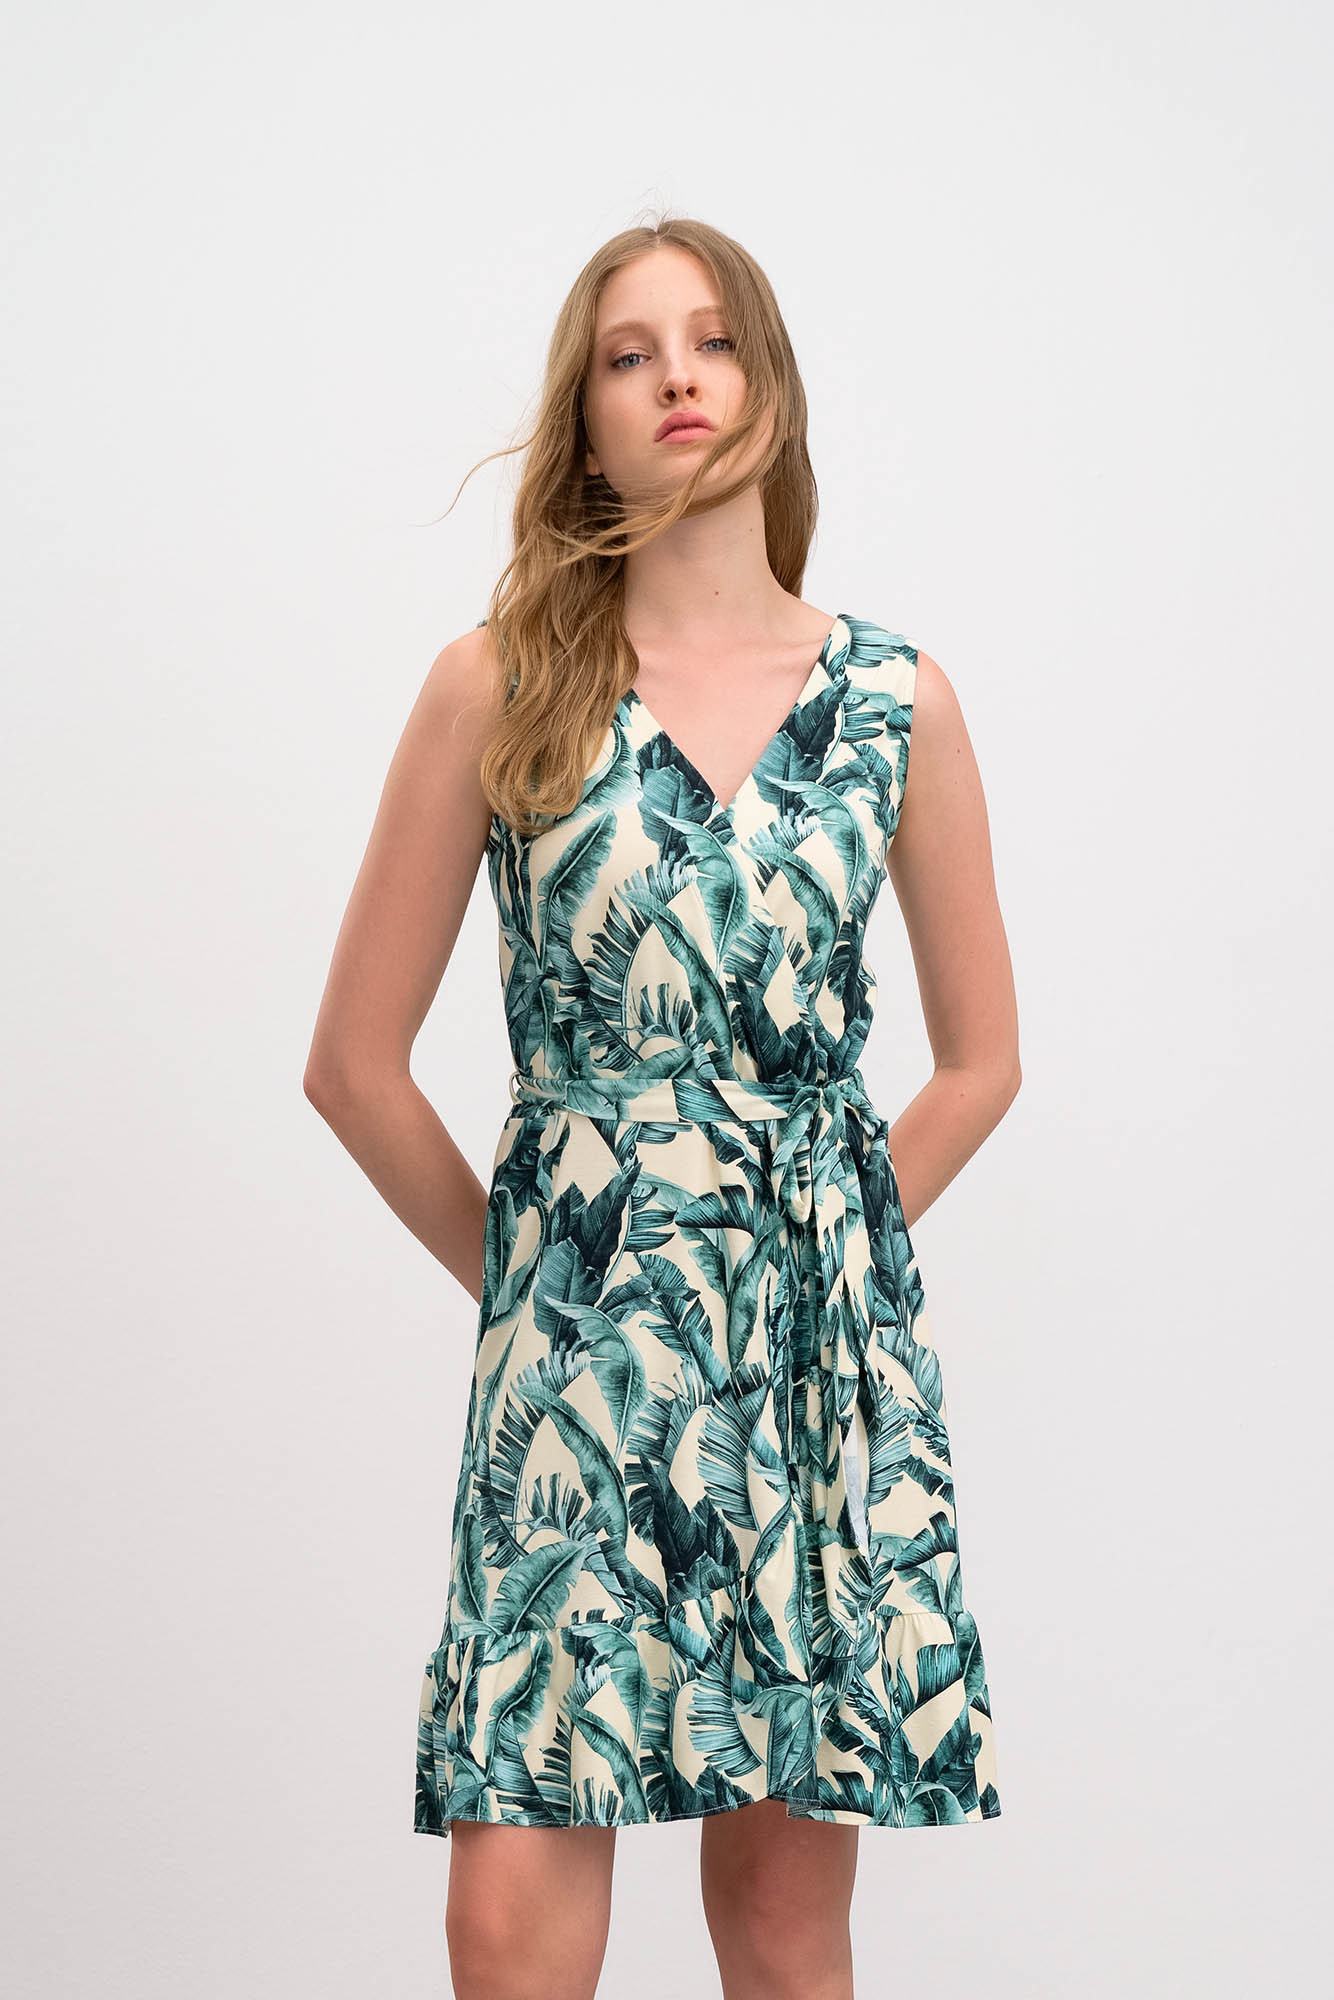 Vamp - Elegantní dámské šaty 16453 - Vamp green lagoon M